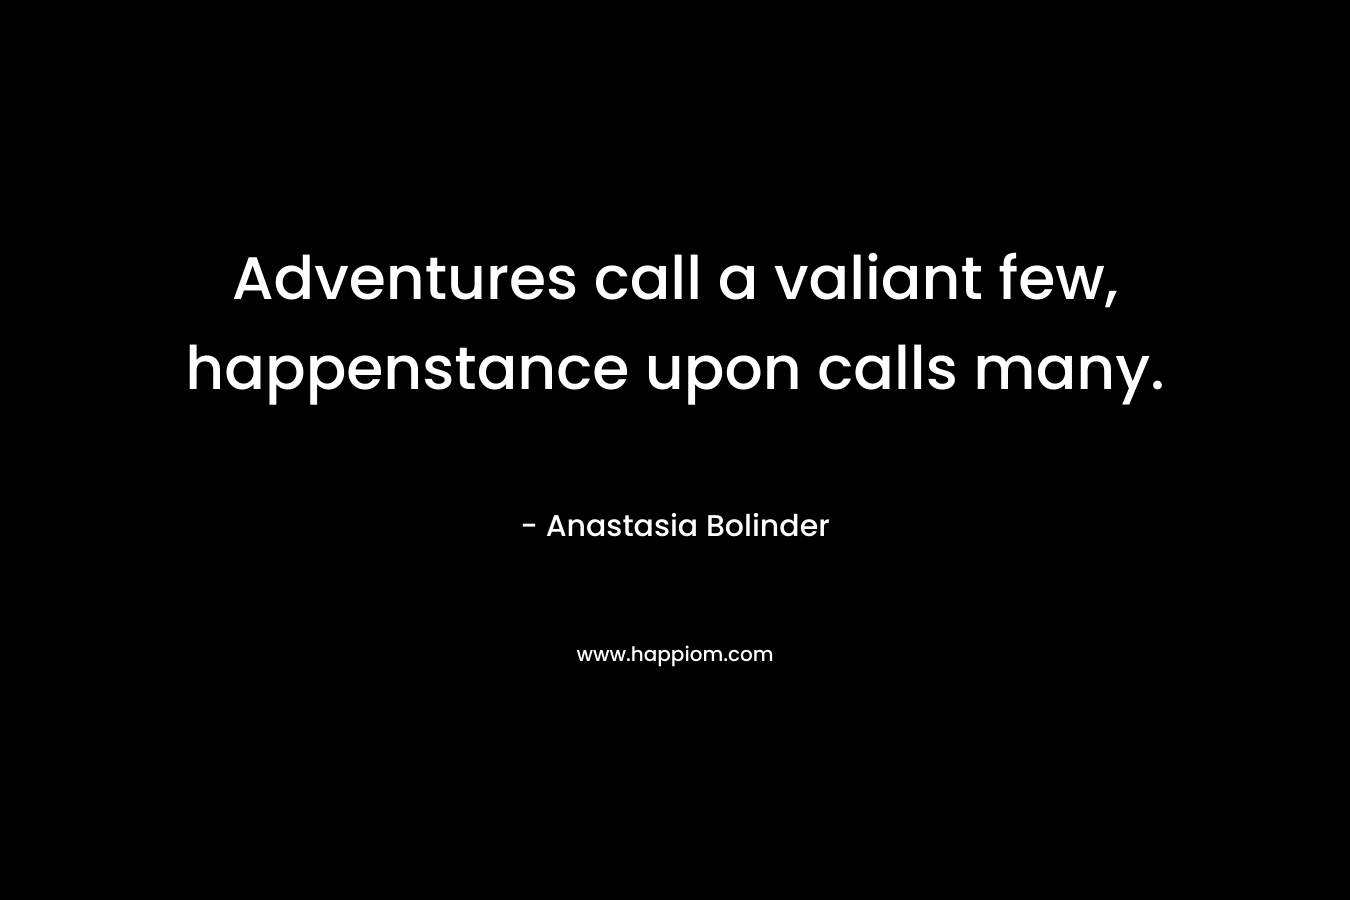 Adventures call a valiant few, happenstance upon calls many.